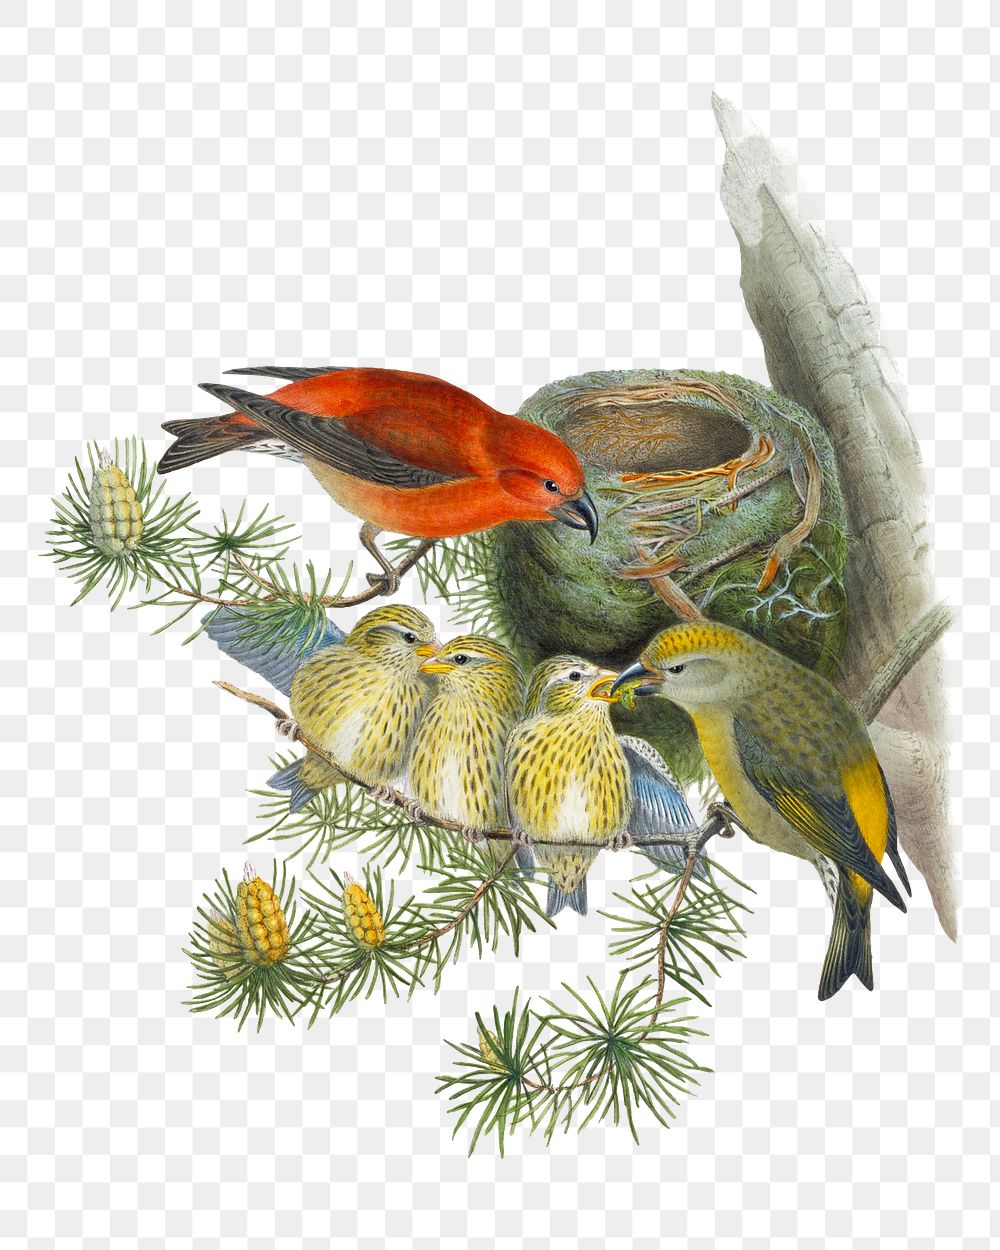 Common Crossbill png bird sticker, vintage animal illustration, transparent background